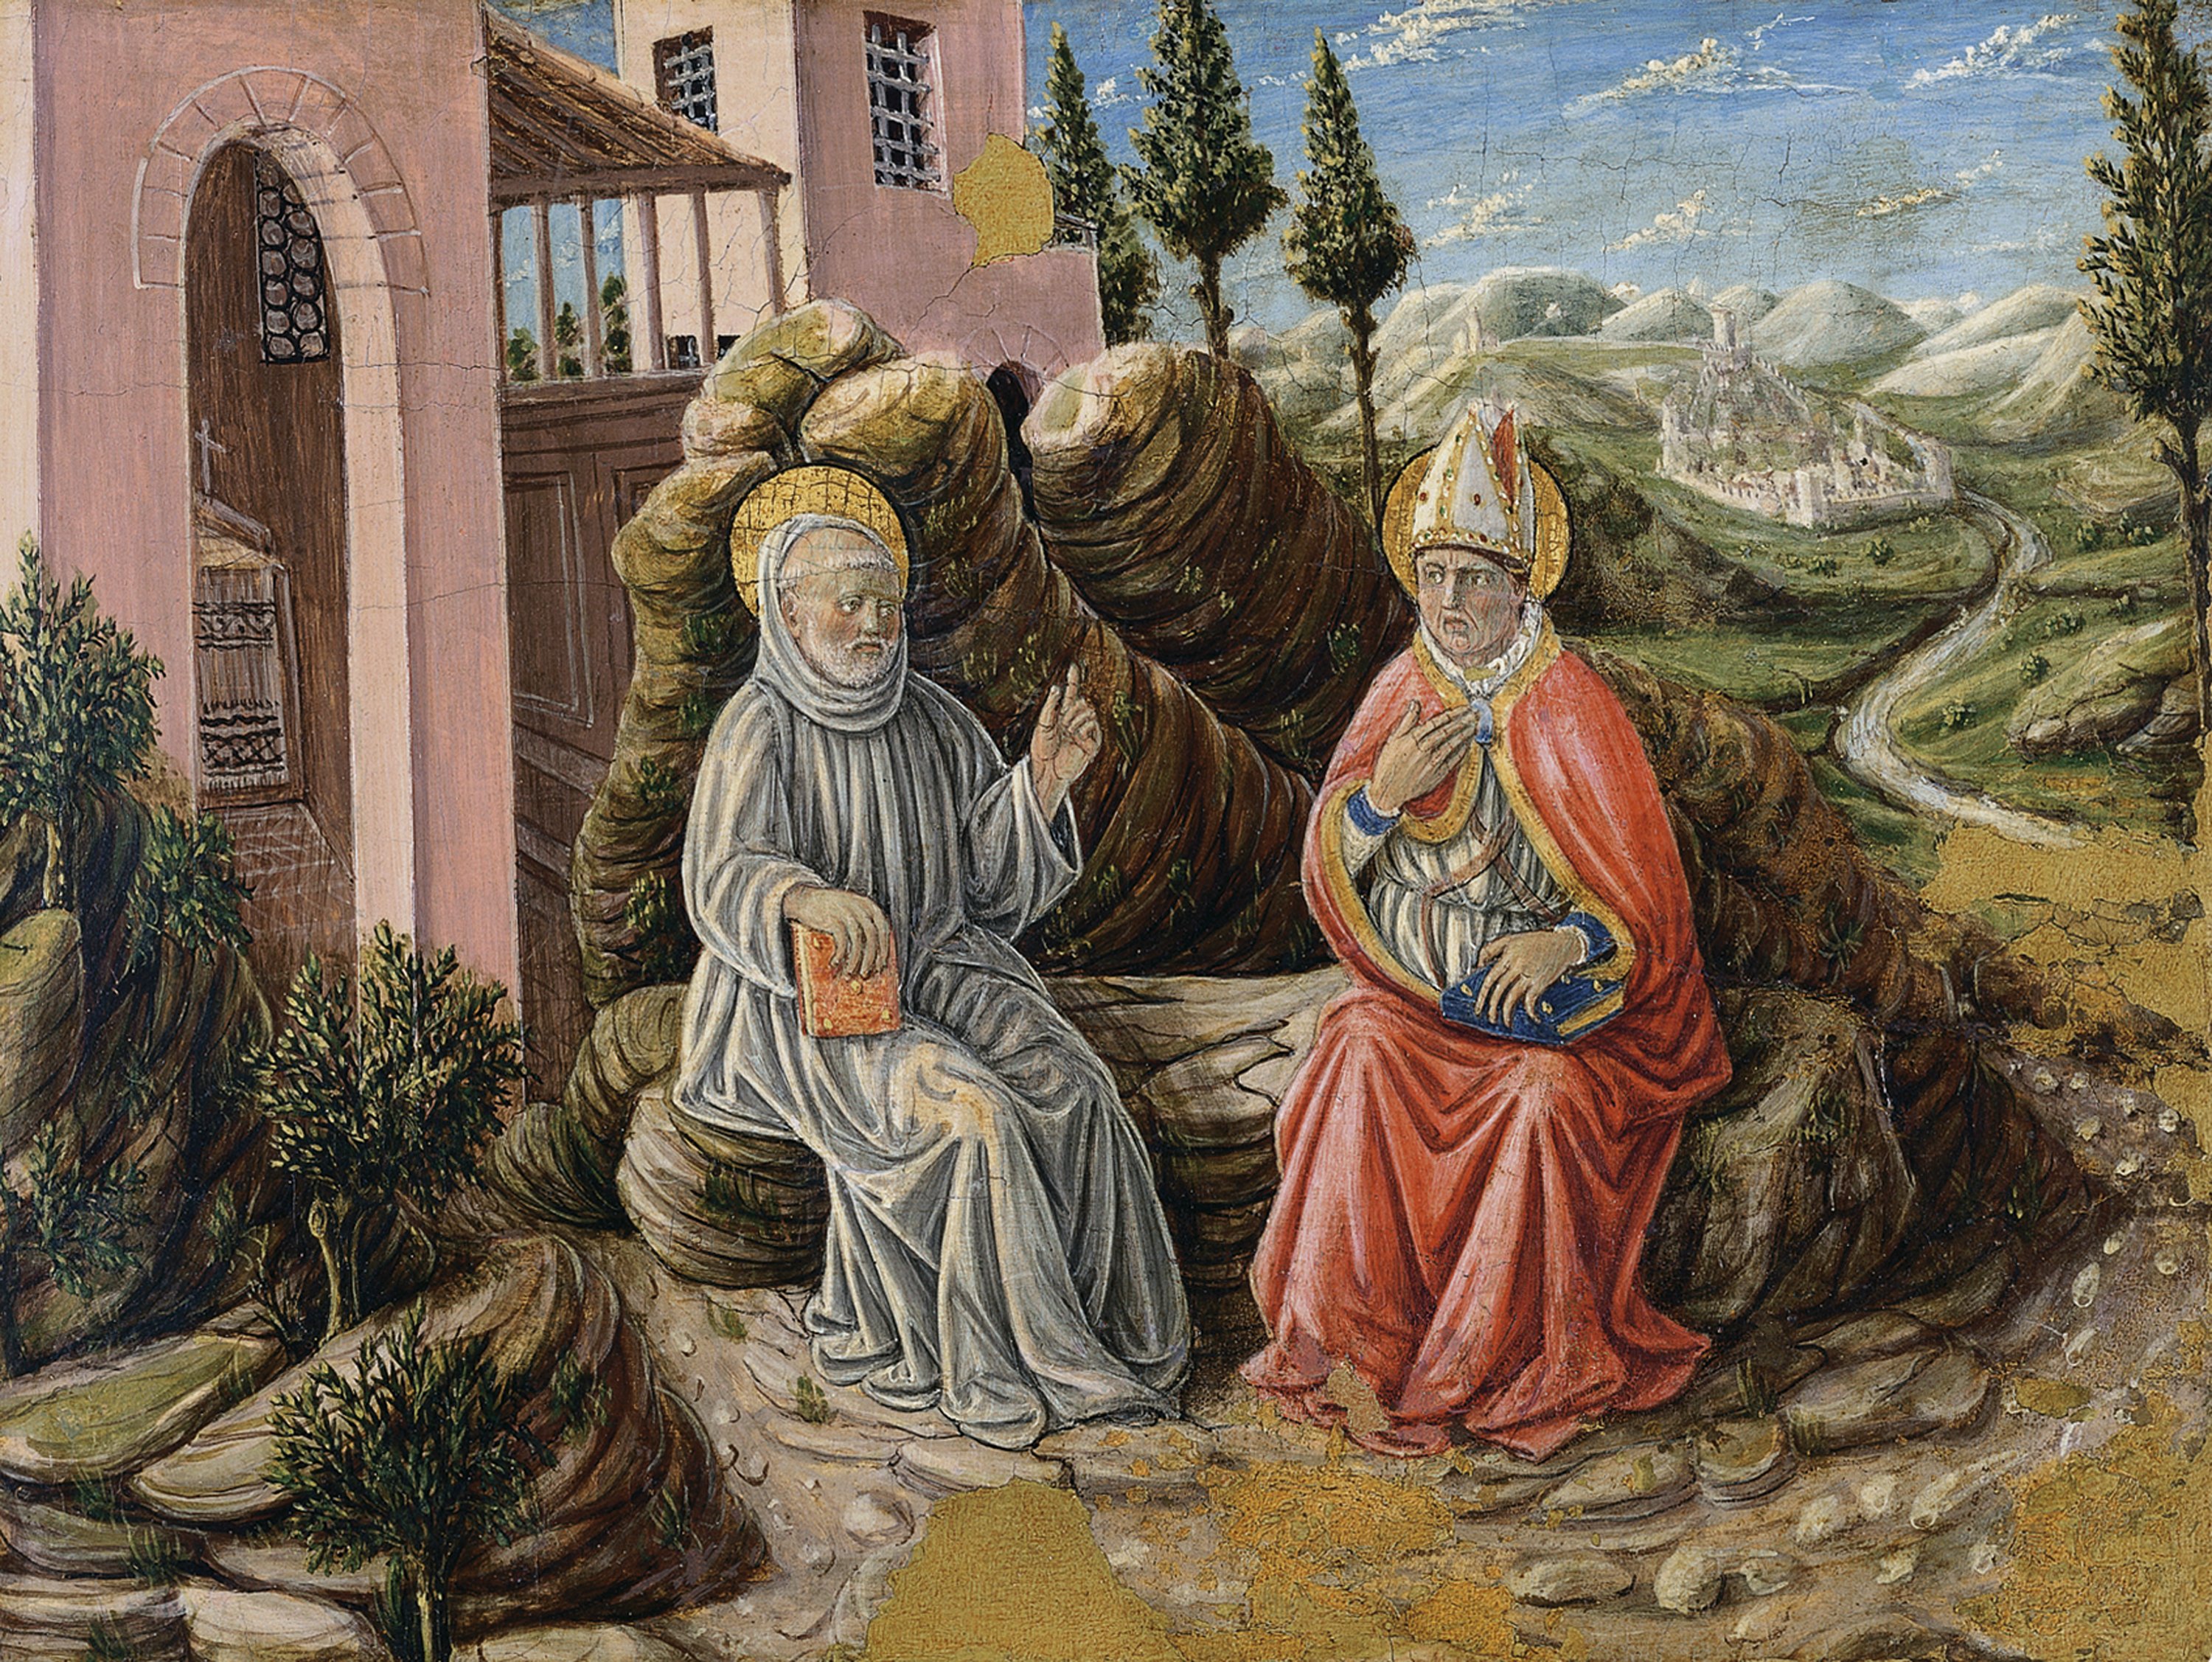 Saint Sabinus conversing with St. Benedict. San Sabino conversando con san Benito, 1473